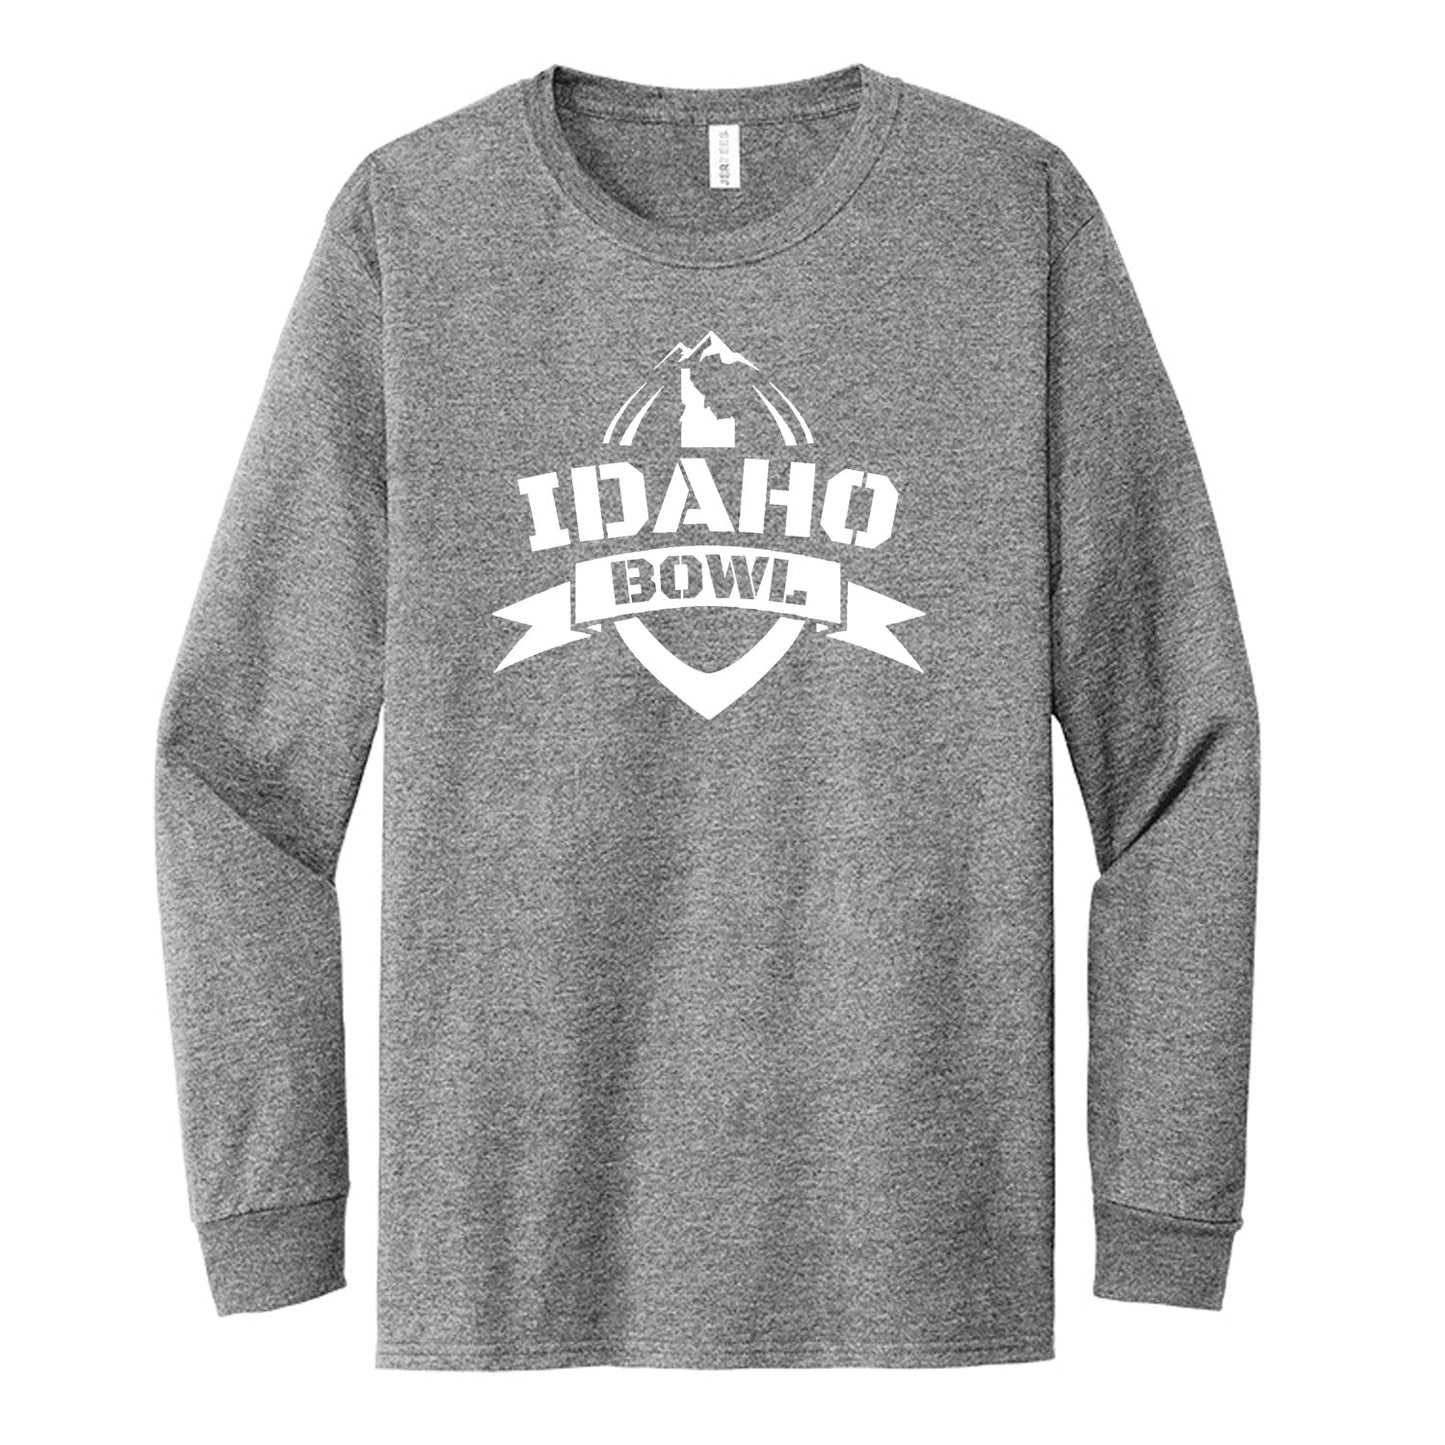 Idaho Bowl - YOUTH Premium Long Sleeve T-Shirt - 2 colors available